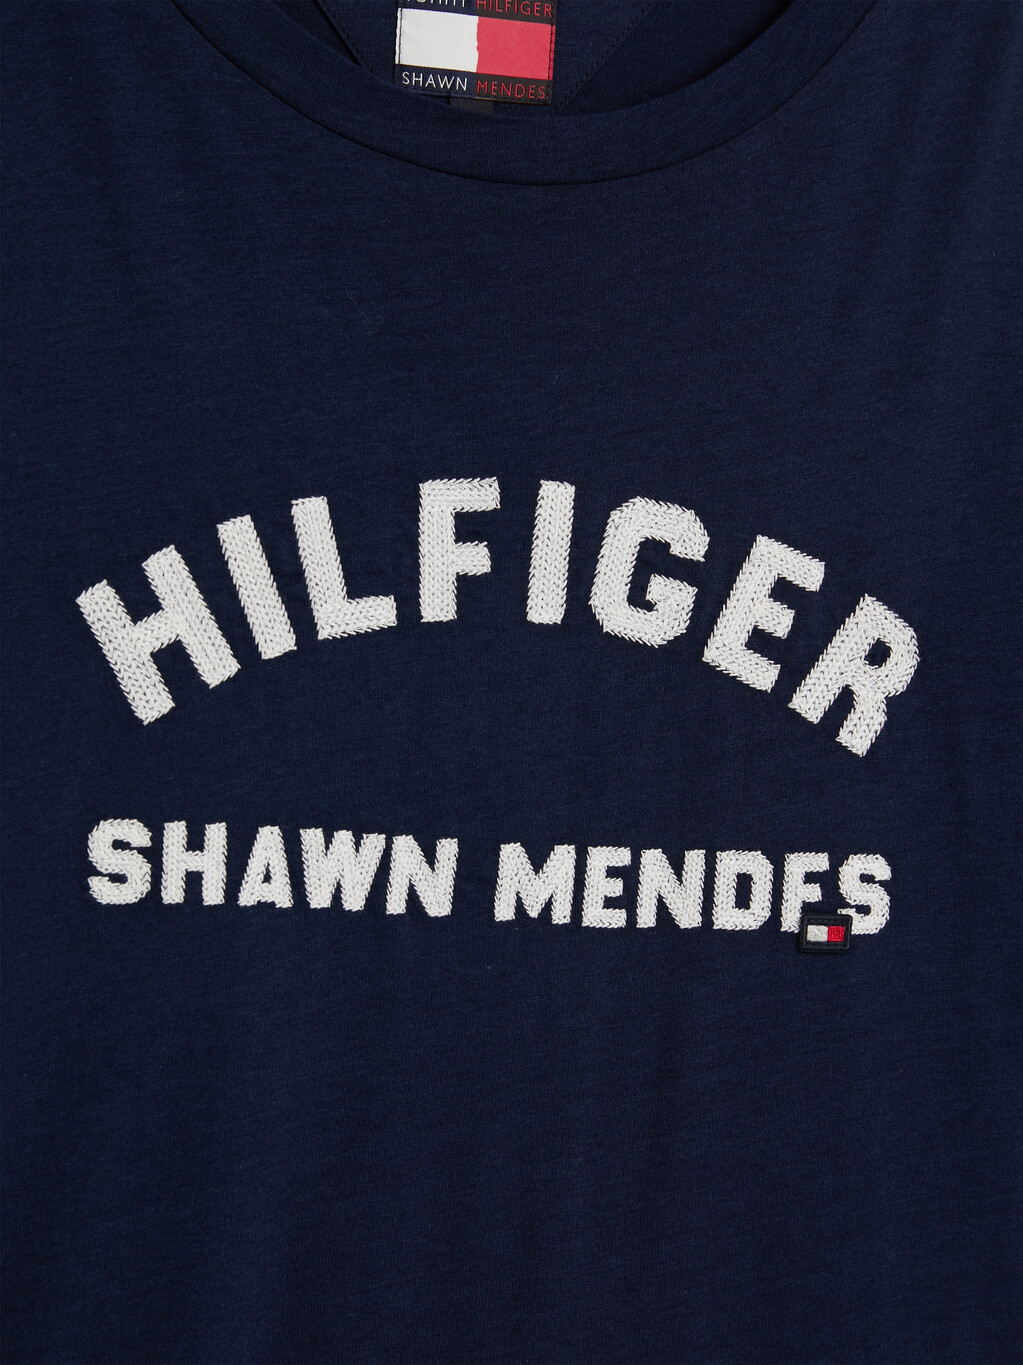 Tommy Hilfiger X Shawn Mendes Archive T-Shirt, Carbon Navy, hi-res